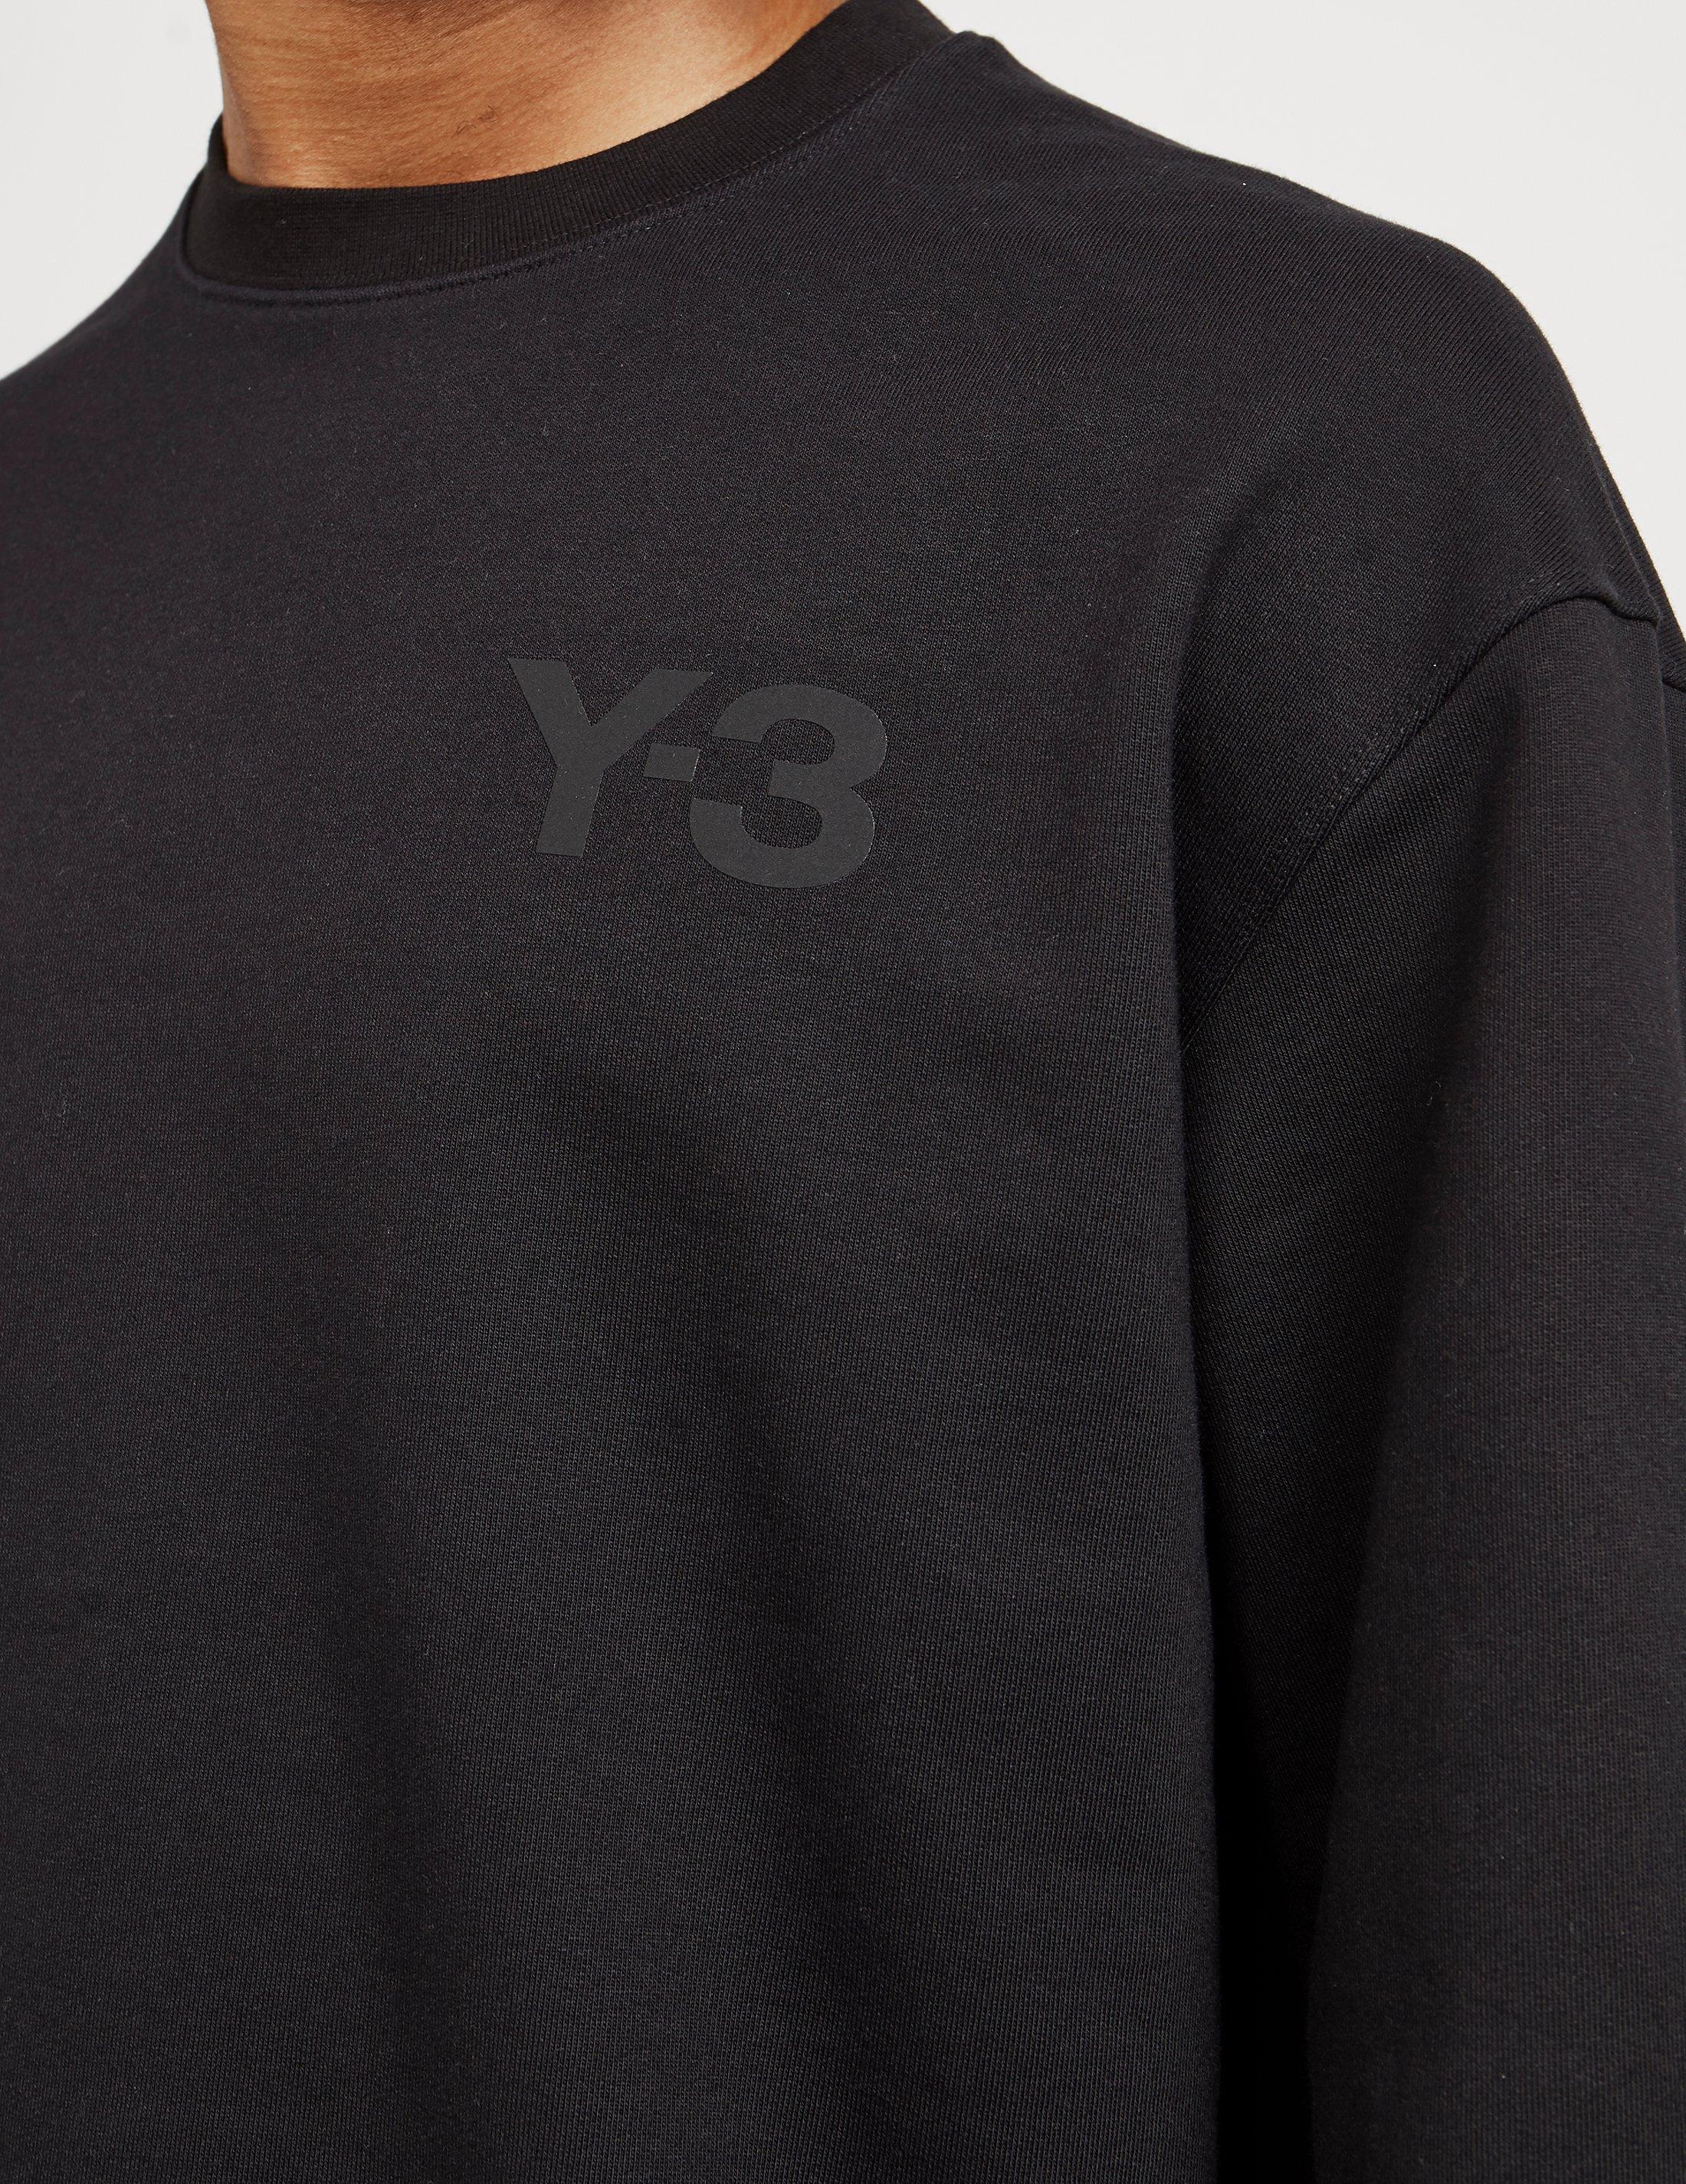 y3 sweatshirt